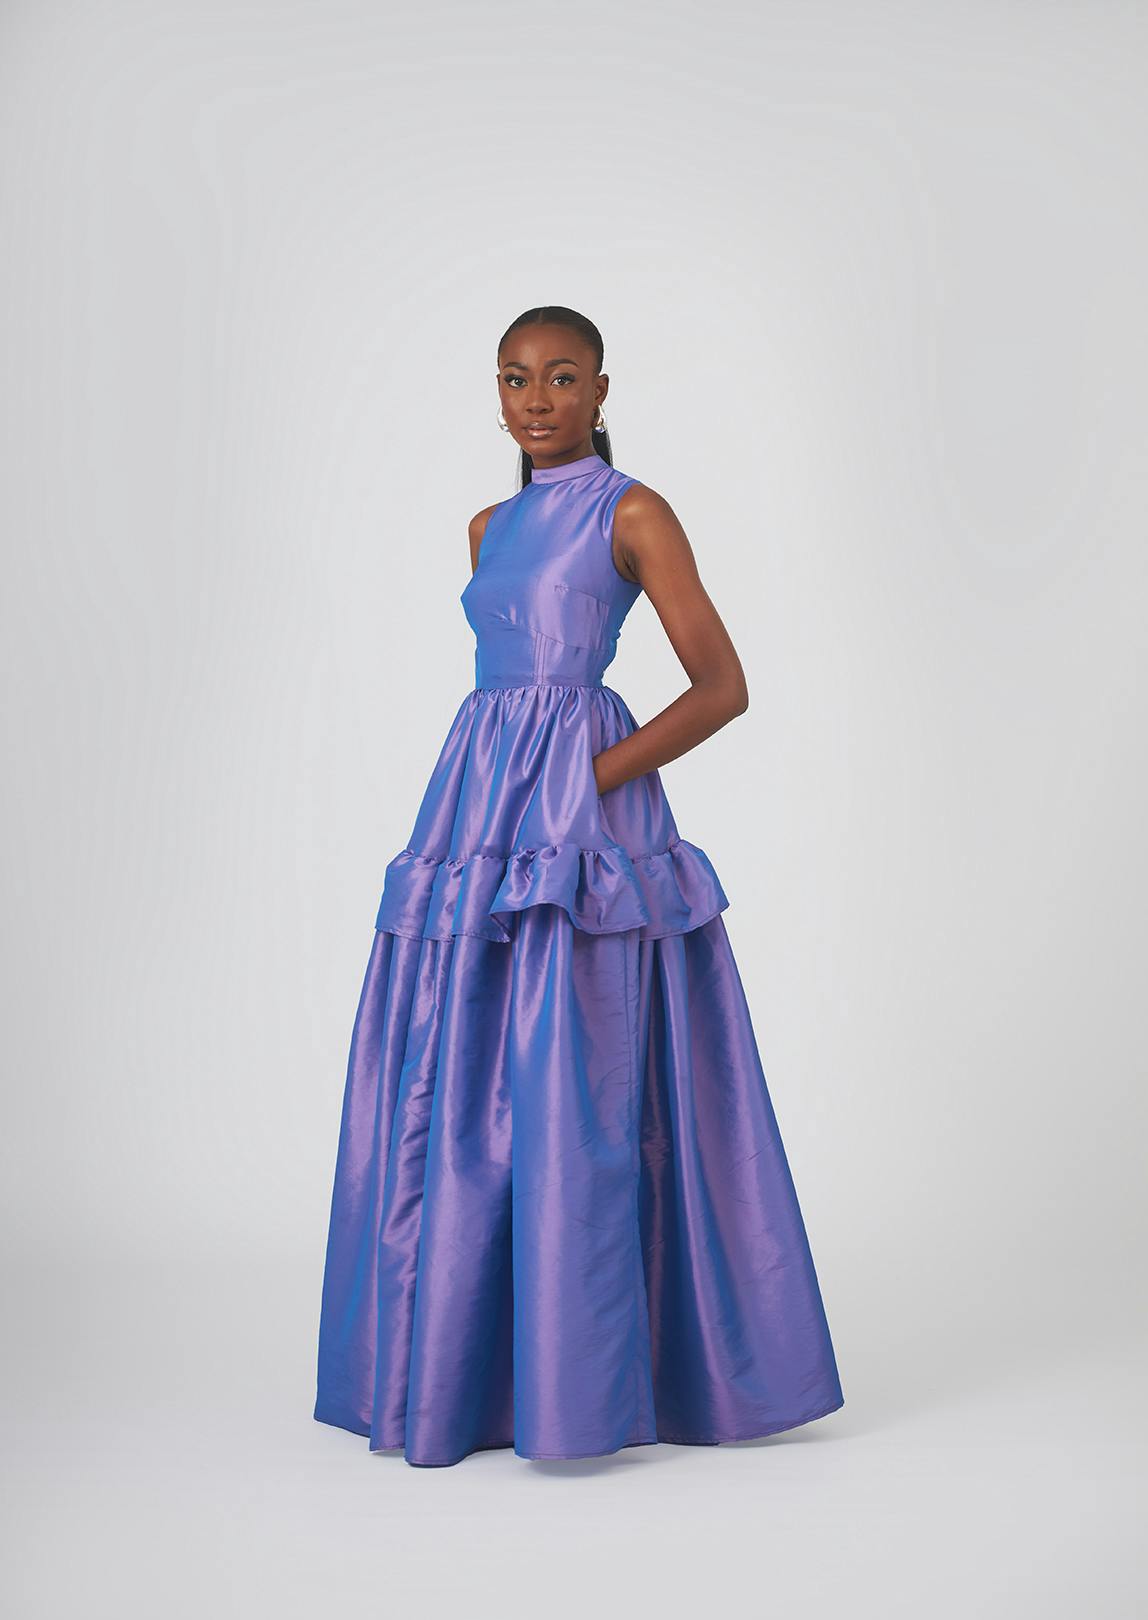 Alexa Dress, a product by M.O.T